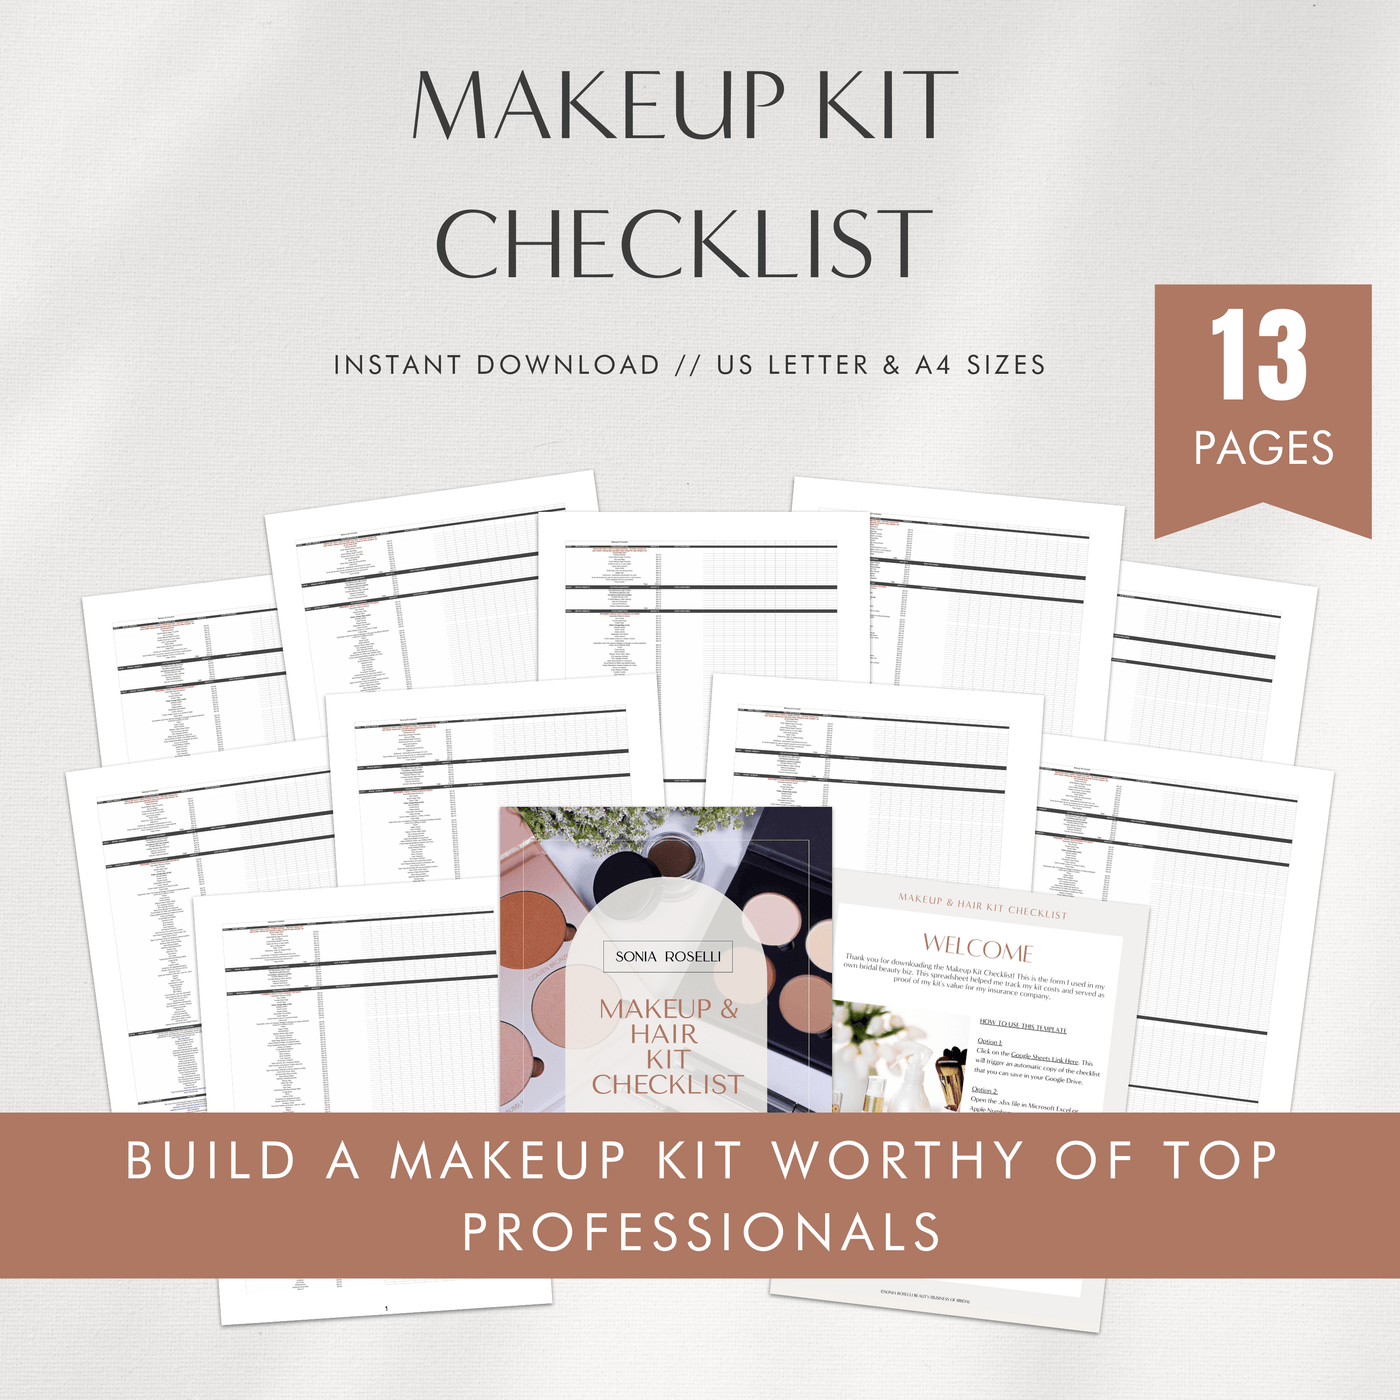 Makeup Kit Checklist, build a makeup kit worth of top professionals 